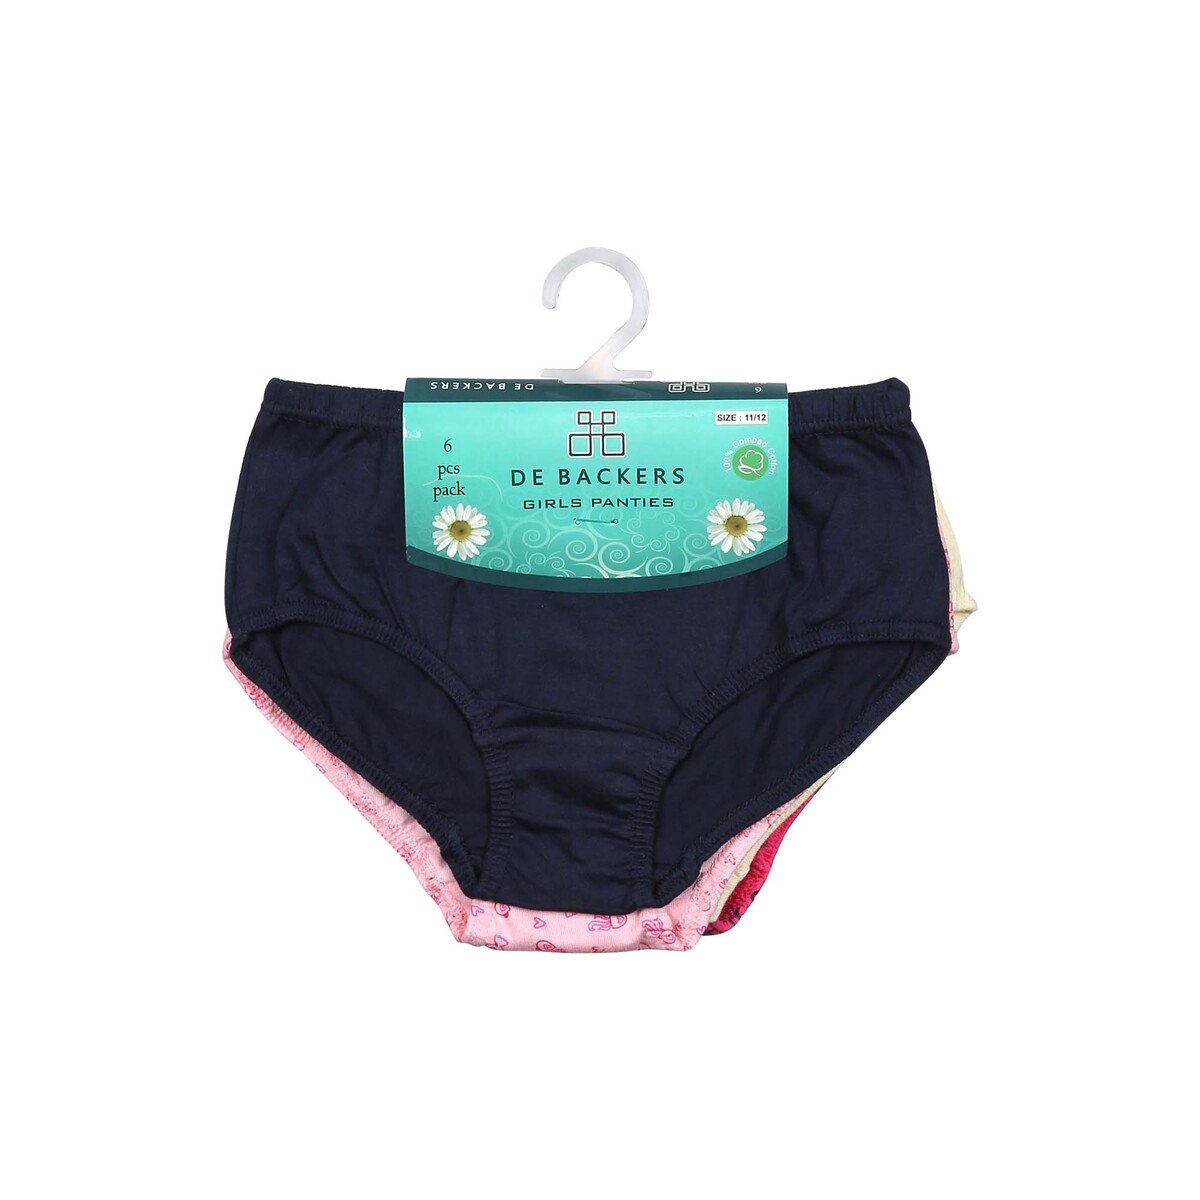 Debackers Girl Panty Assorted Colors Pack of 6 FM52017 9-10Y